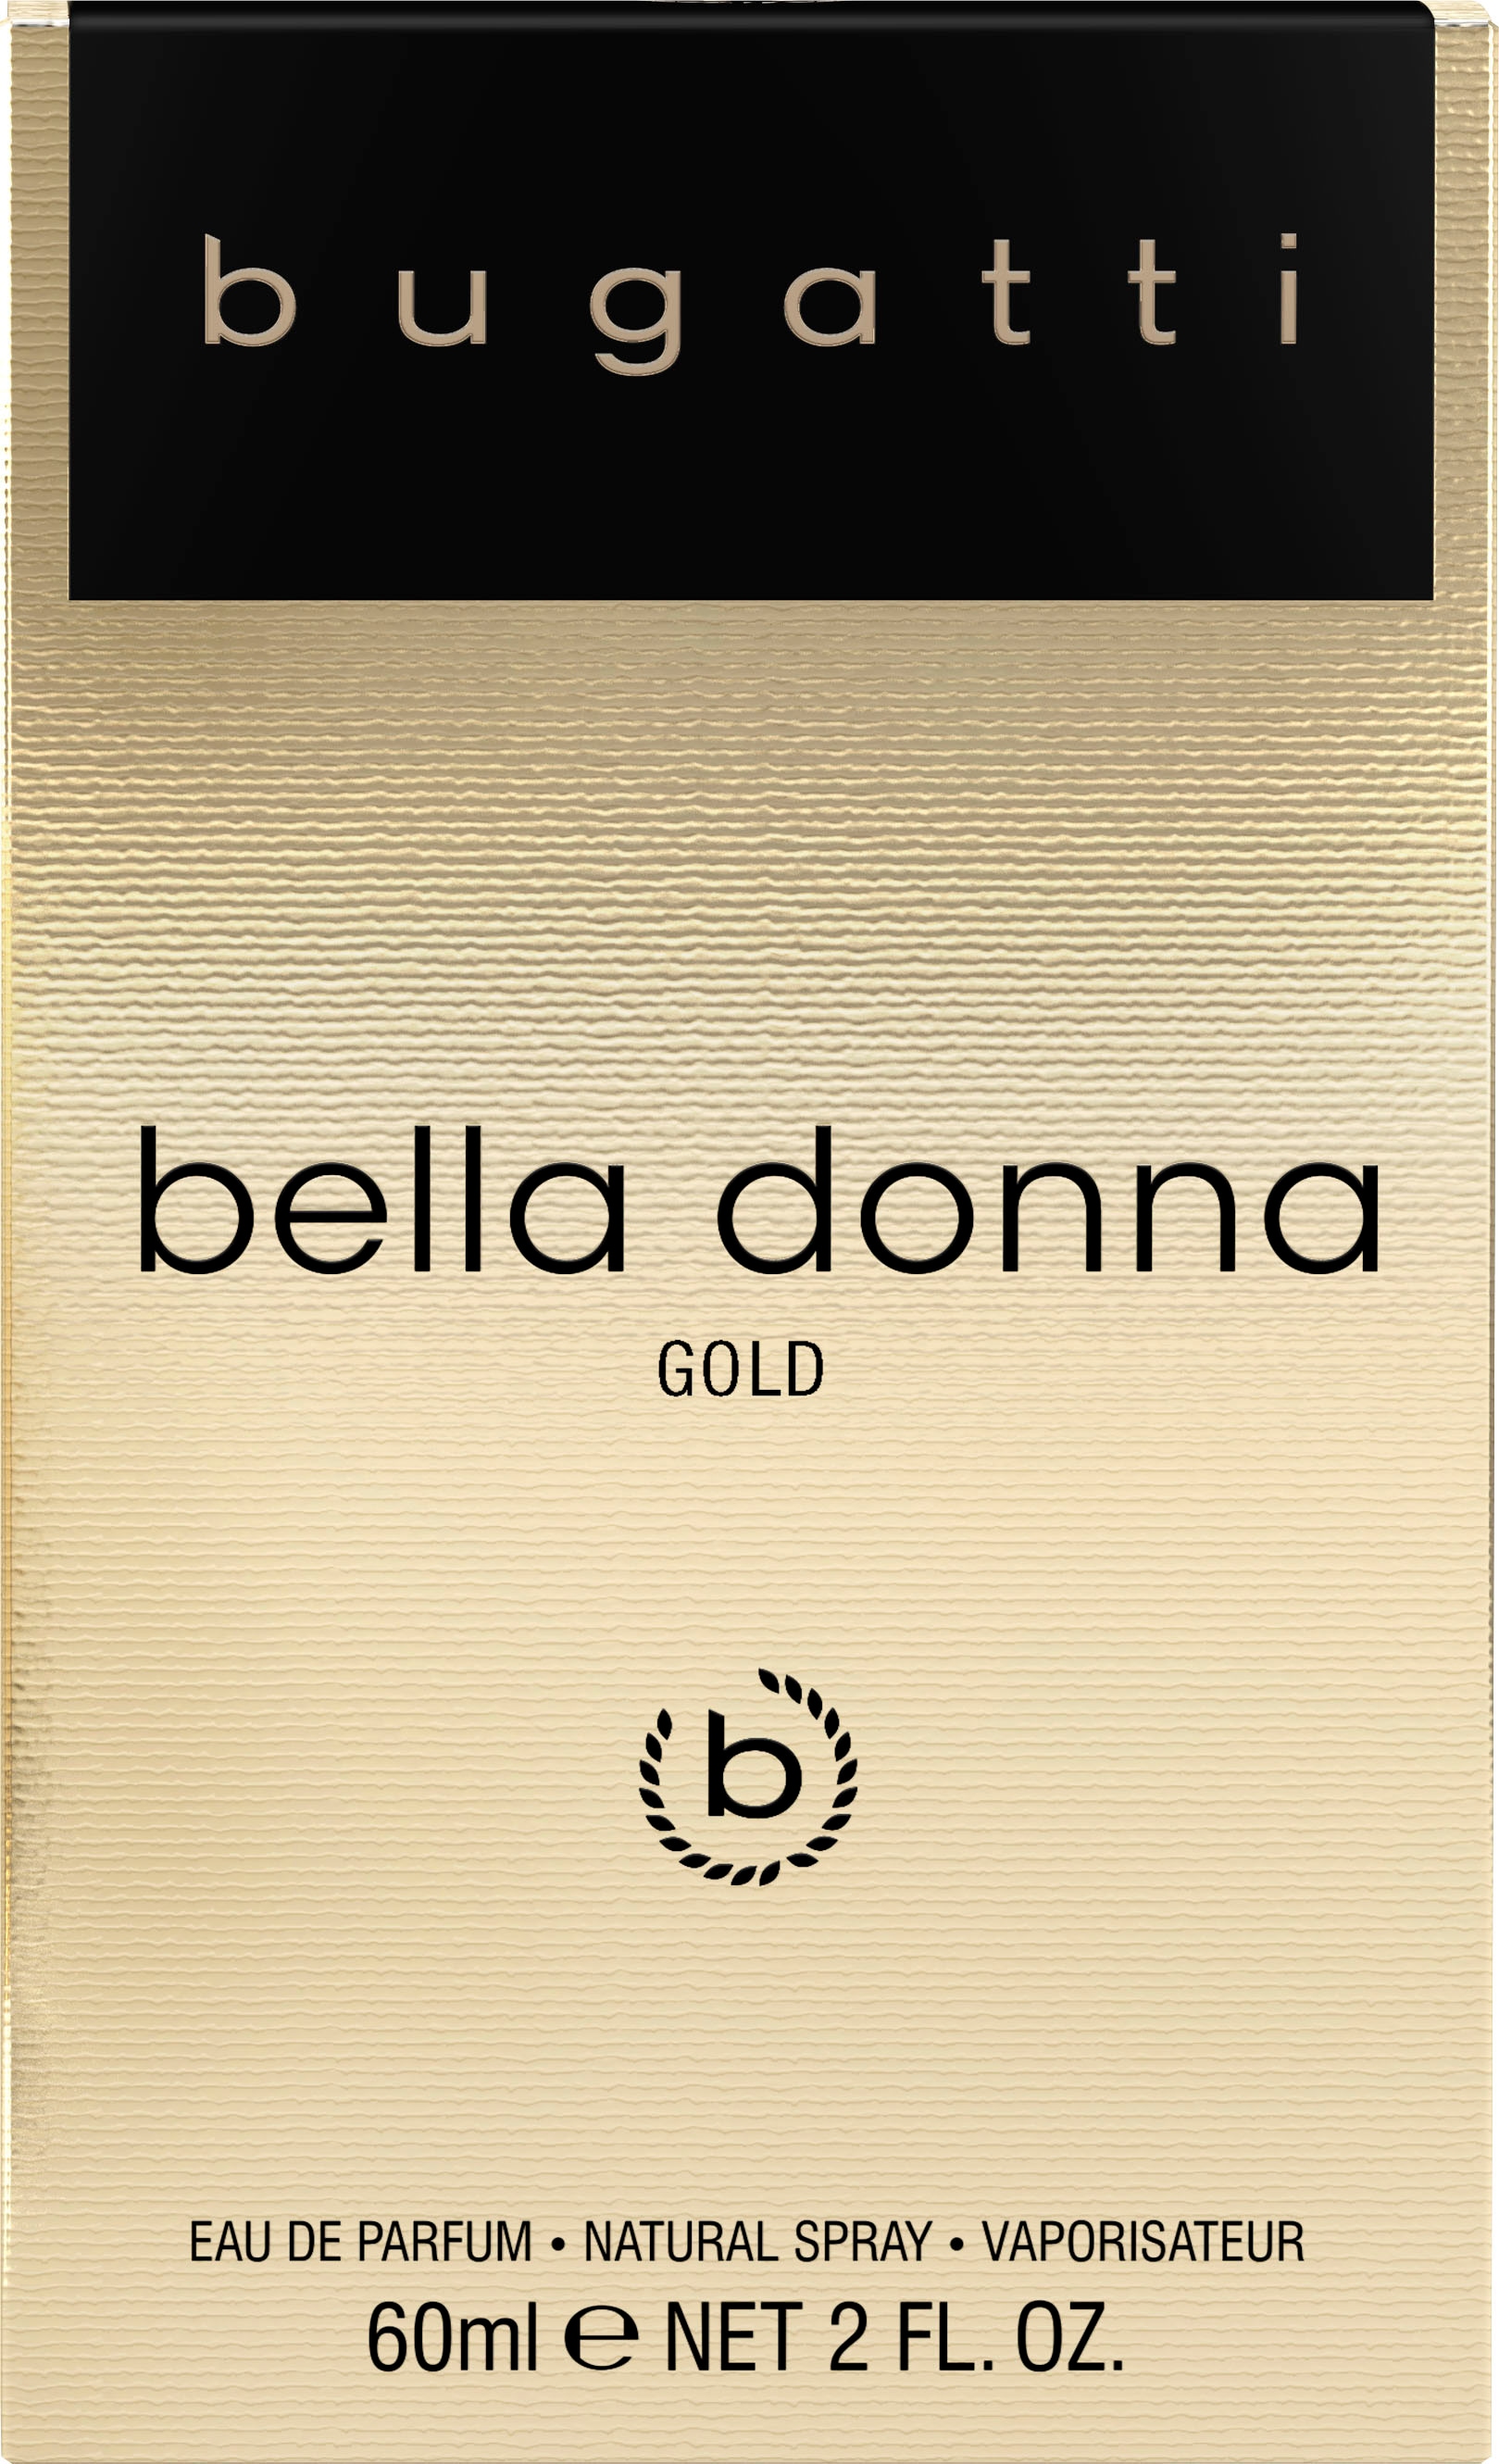 bugatti Eau de Parfum UNIVERSAL EdP ml« online Donna »BUGATTI 60 bei Gold Bella